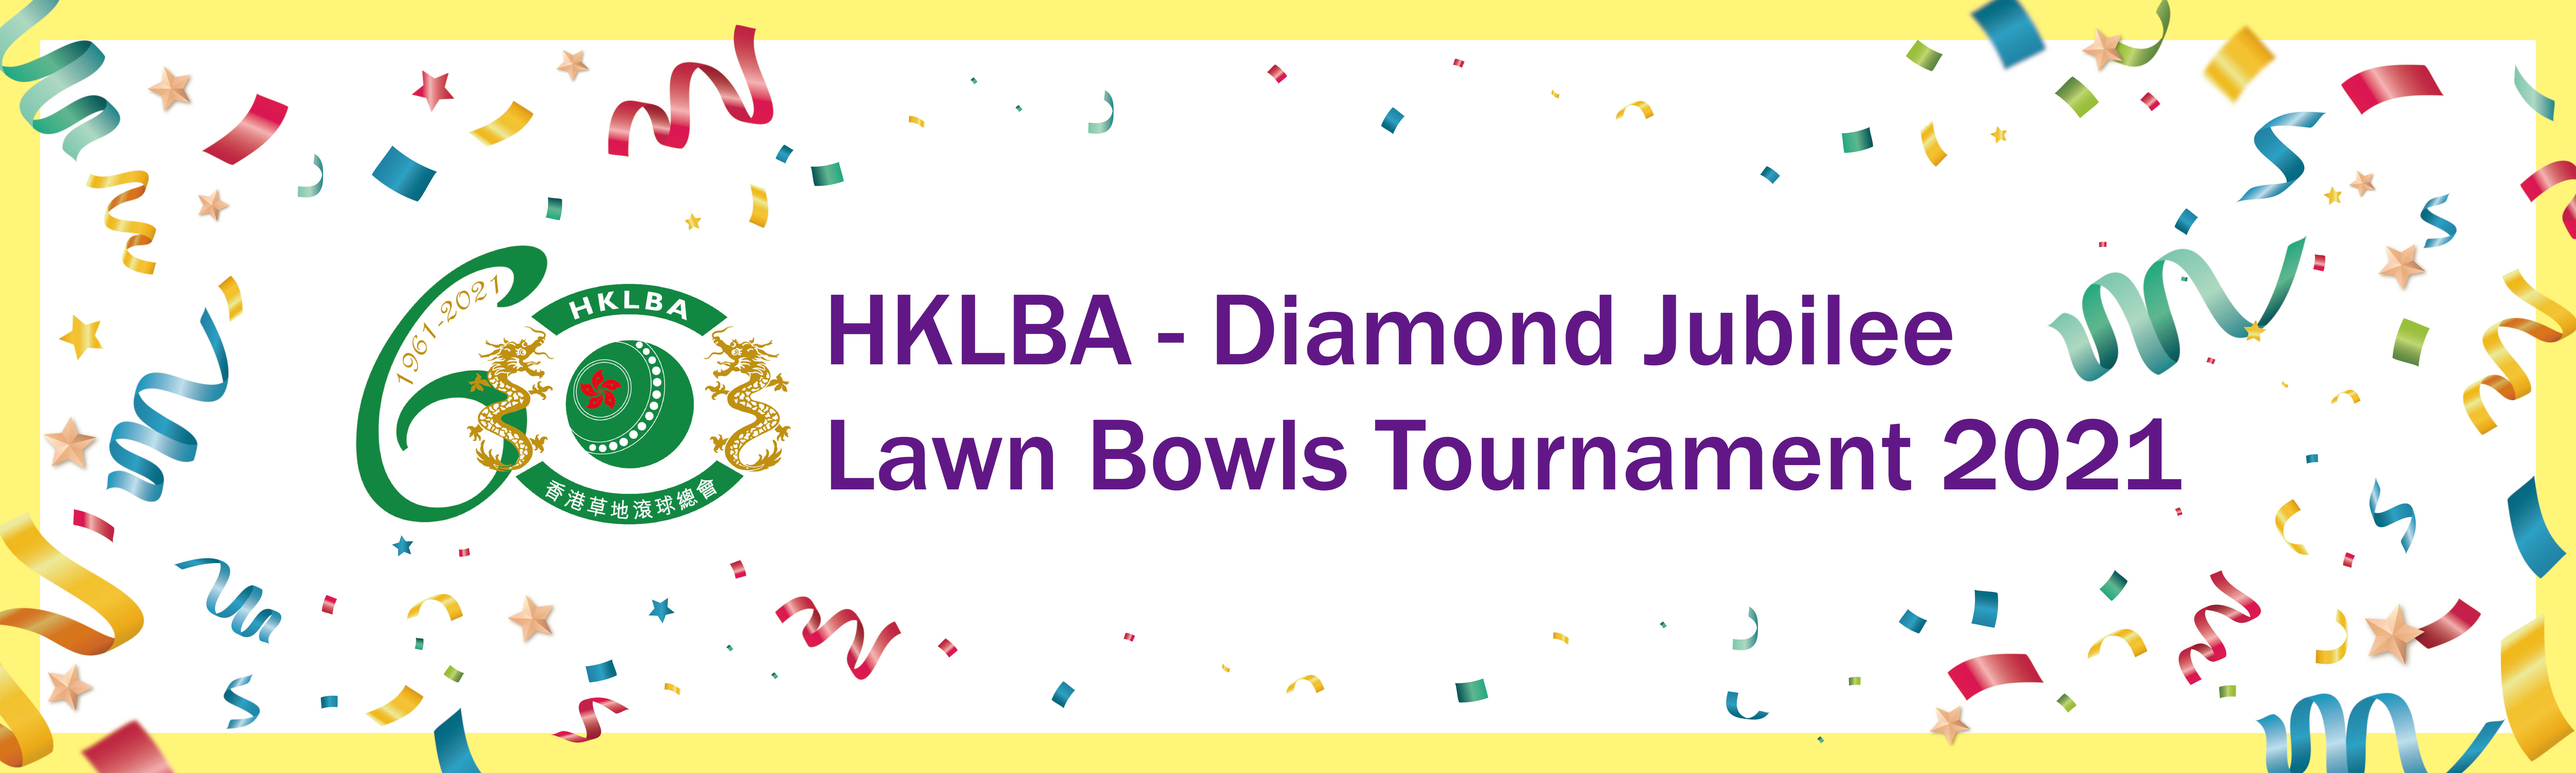 HKLBA Diamond Jubilee Lawn Bowls Tournament (updated on 25/11/21)